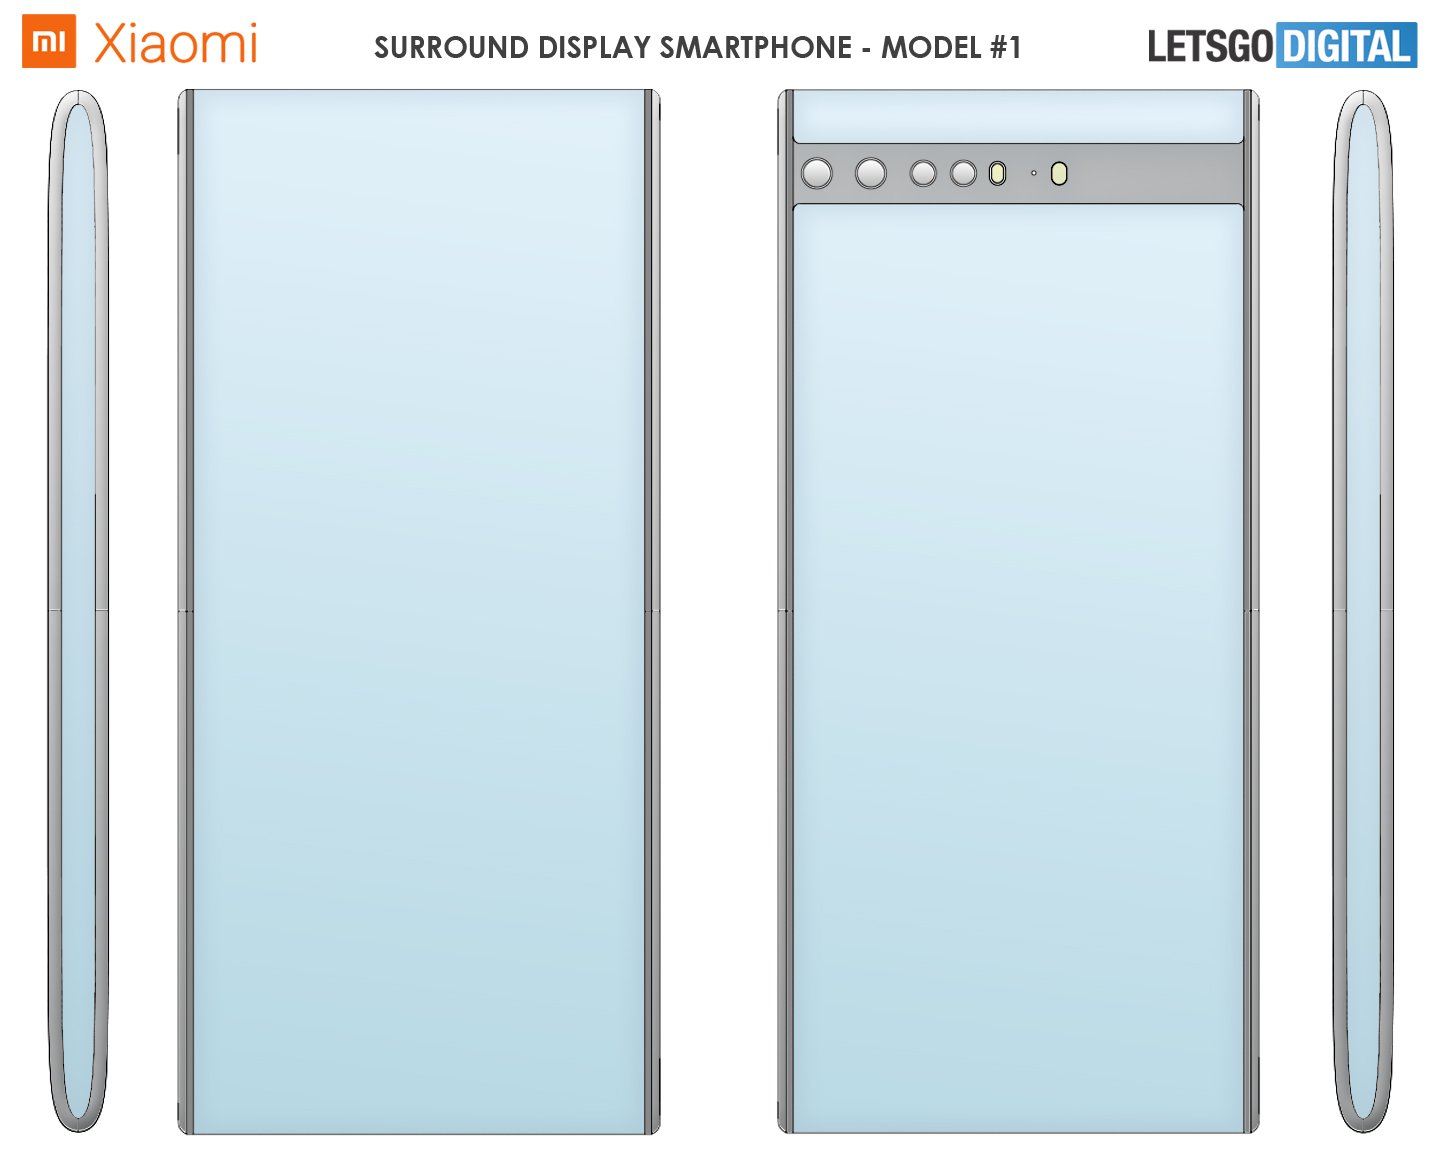 Patente de diseño de teléfono inteligente con pantalla envolvente Xiaomi 01